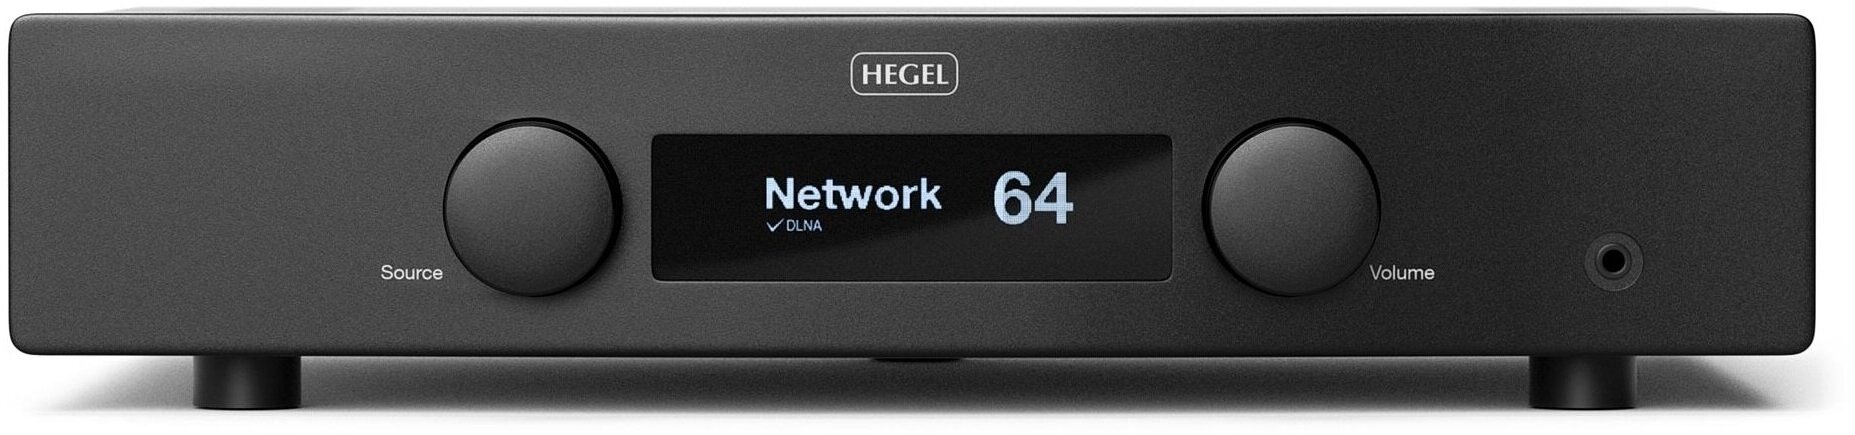 Hegel H95 black